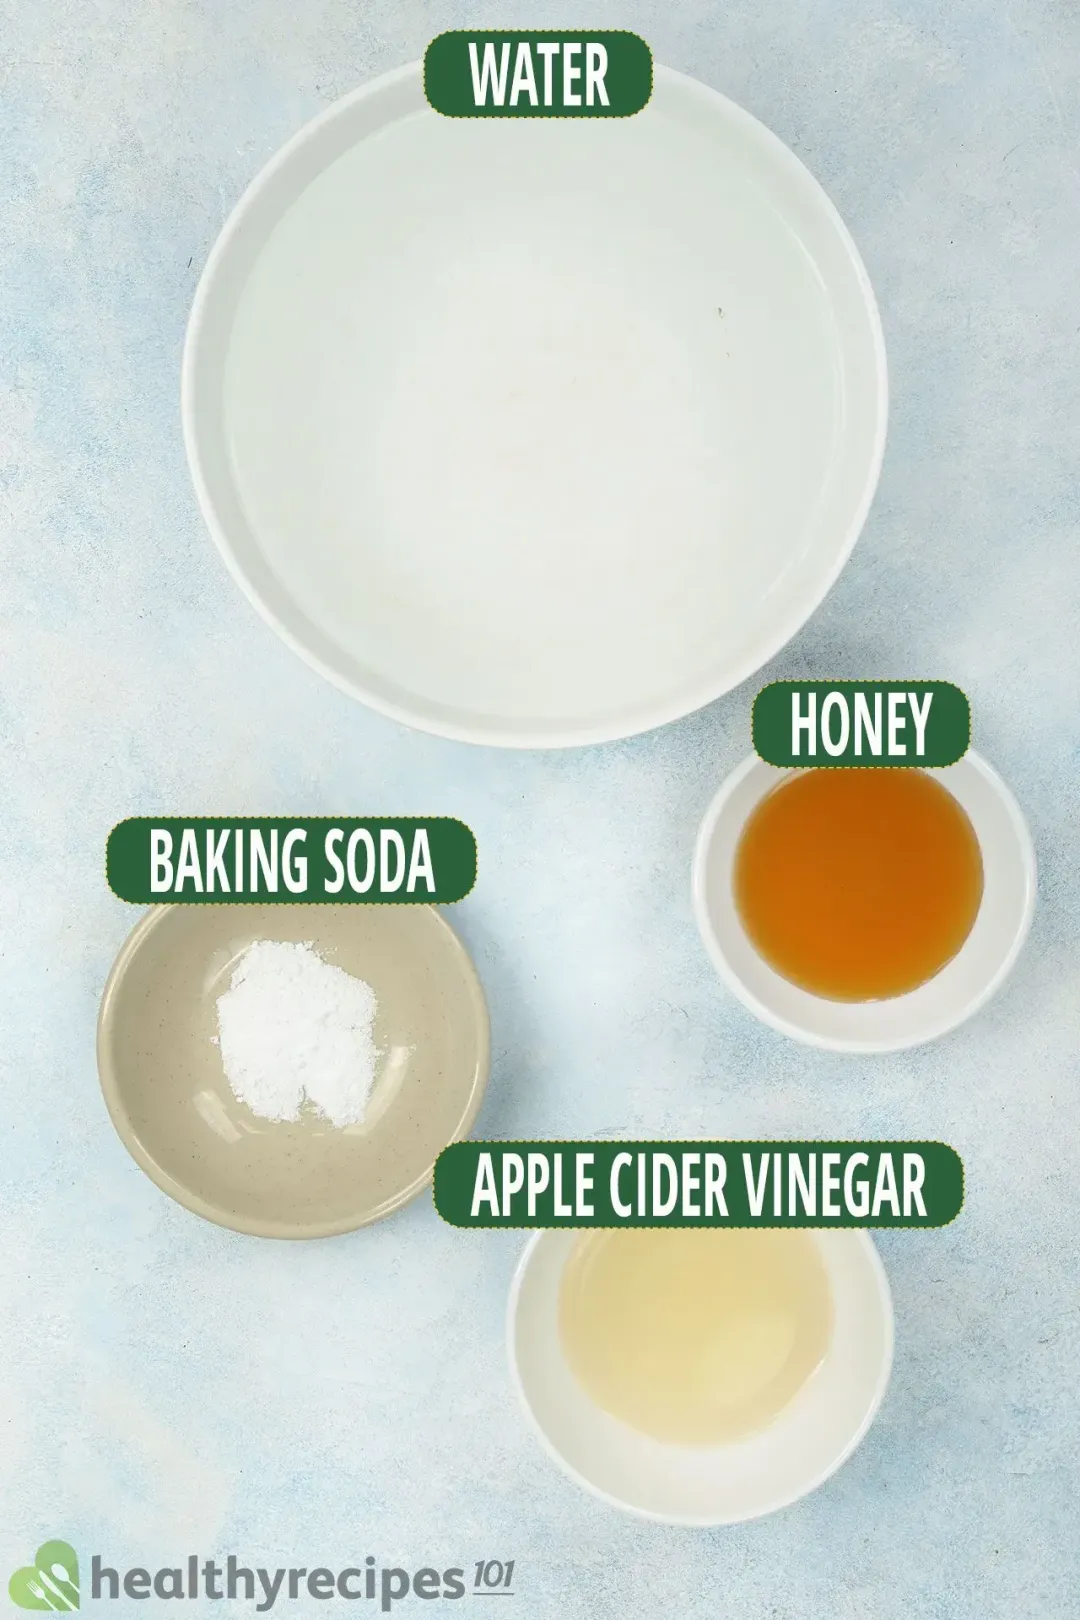 Ingredients: water, honey, baking soda, and apple cider vinegar